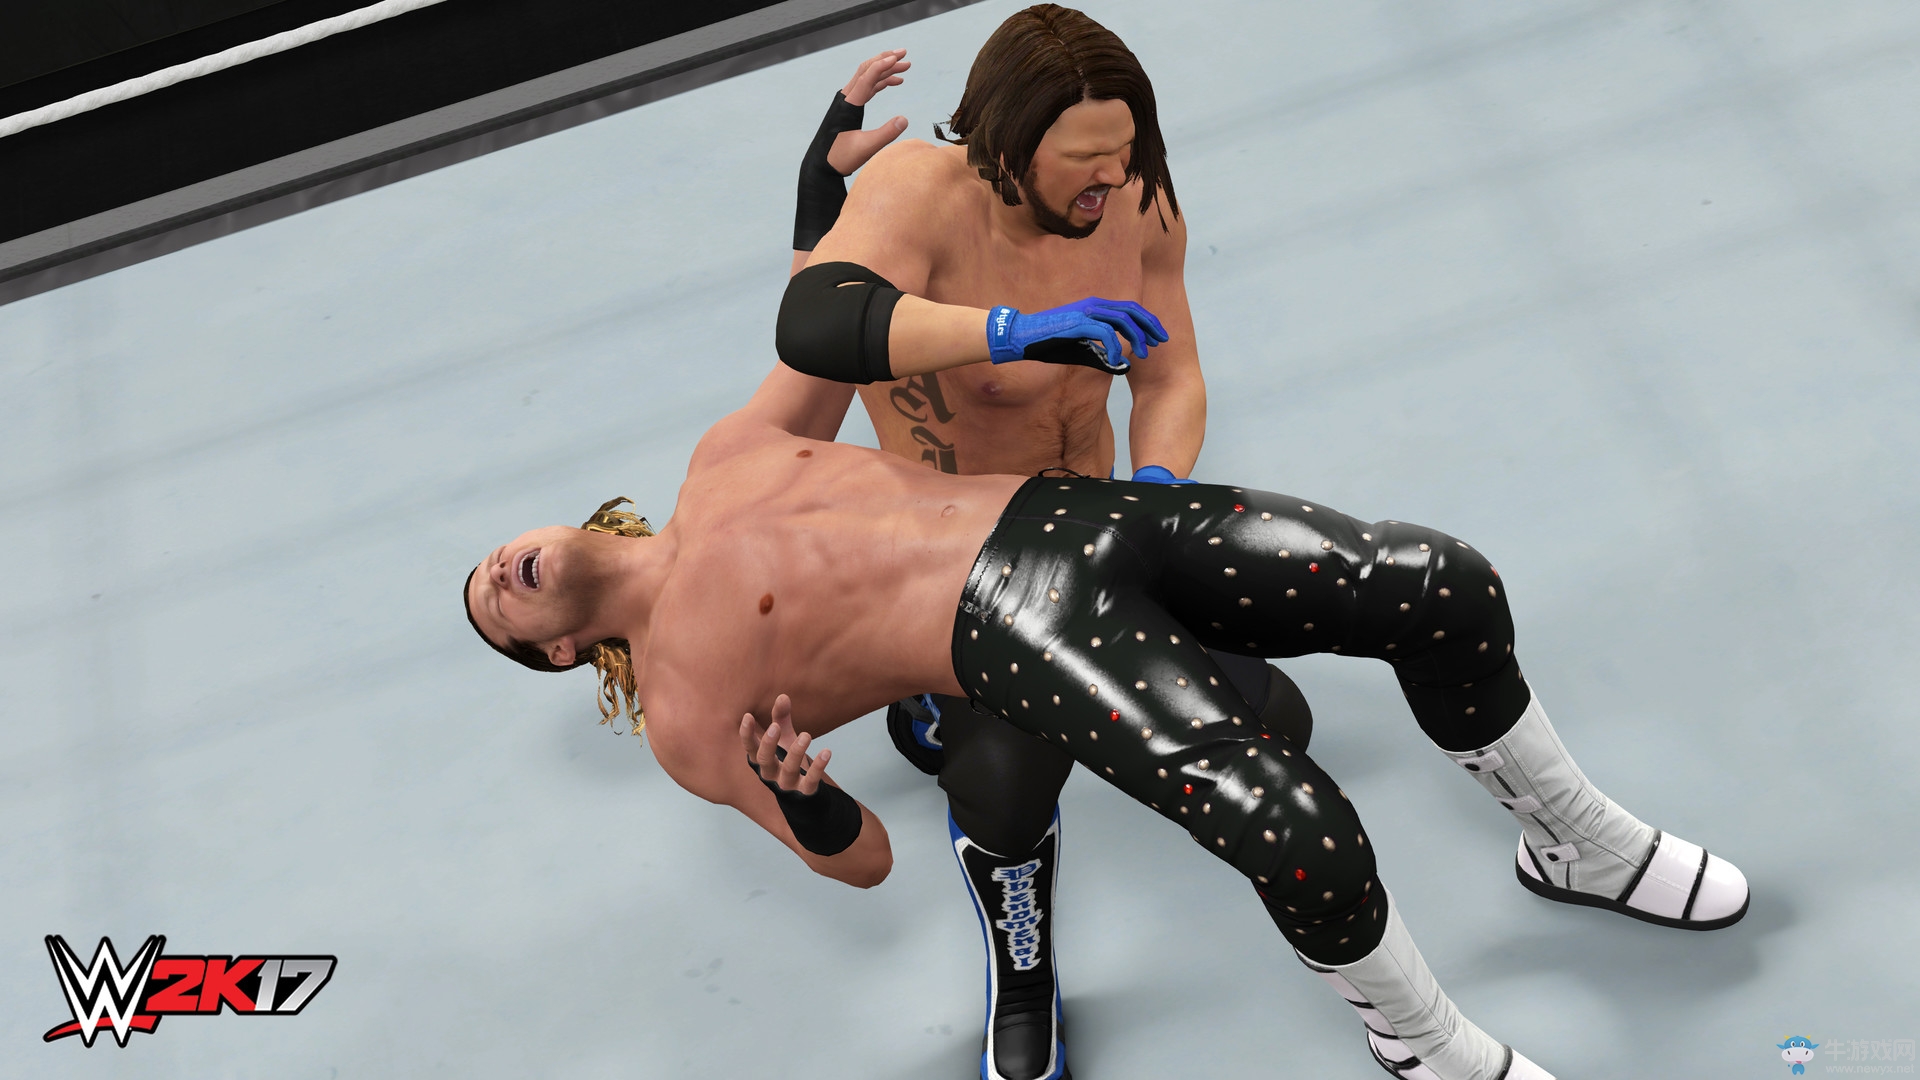 《WWE 2K17》官方公布PC版发售日 豪华版内容一览